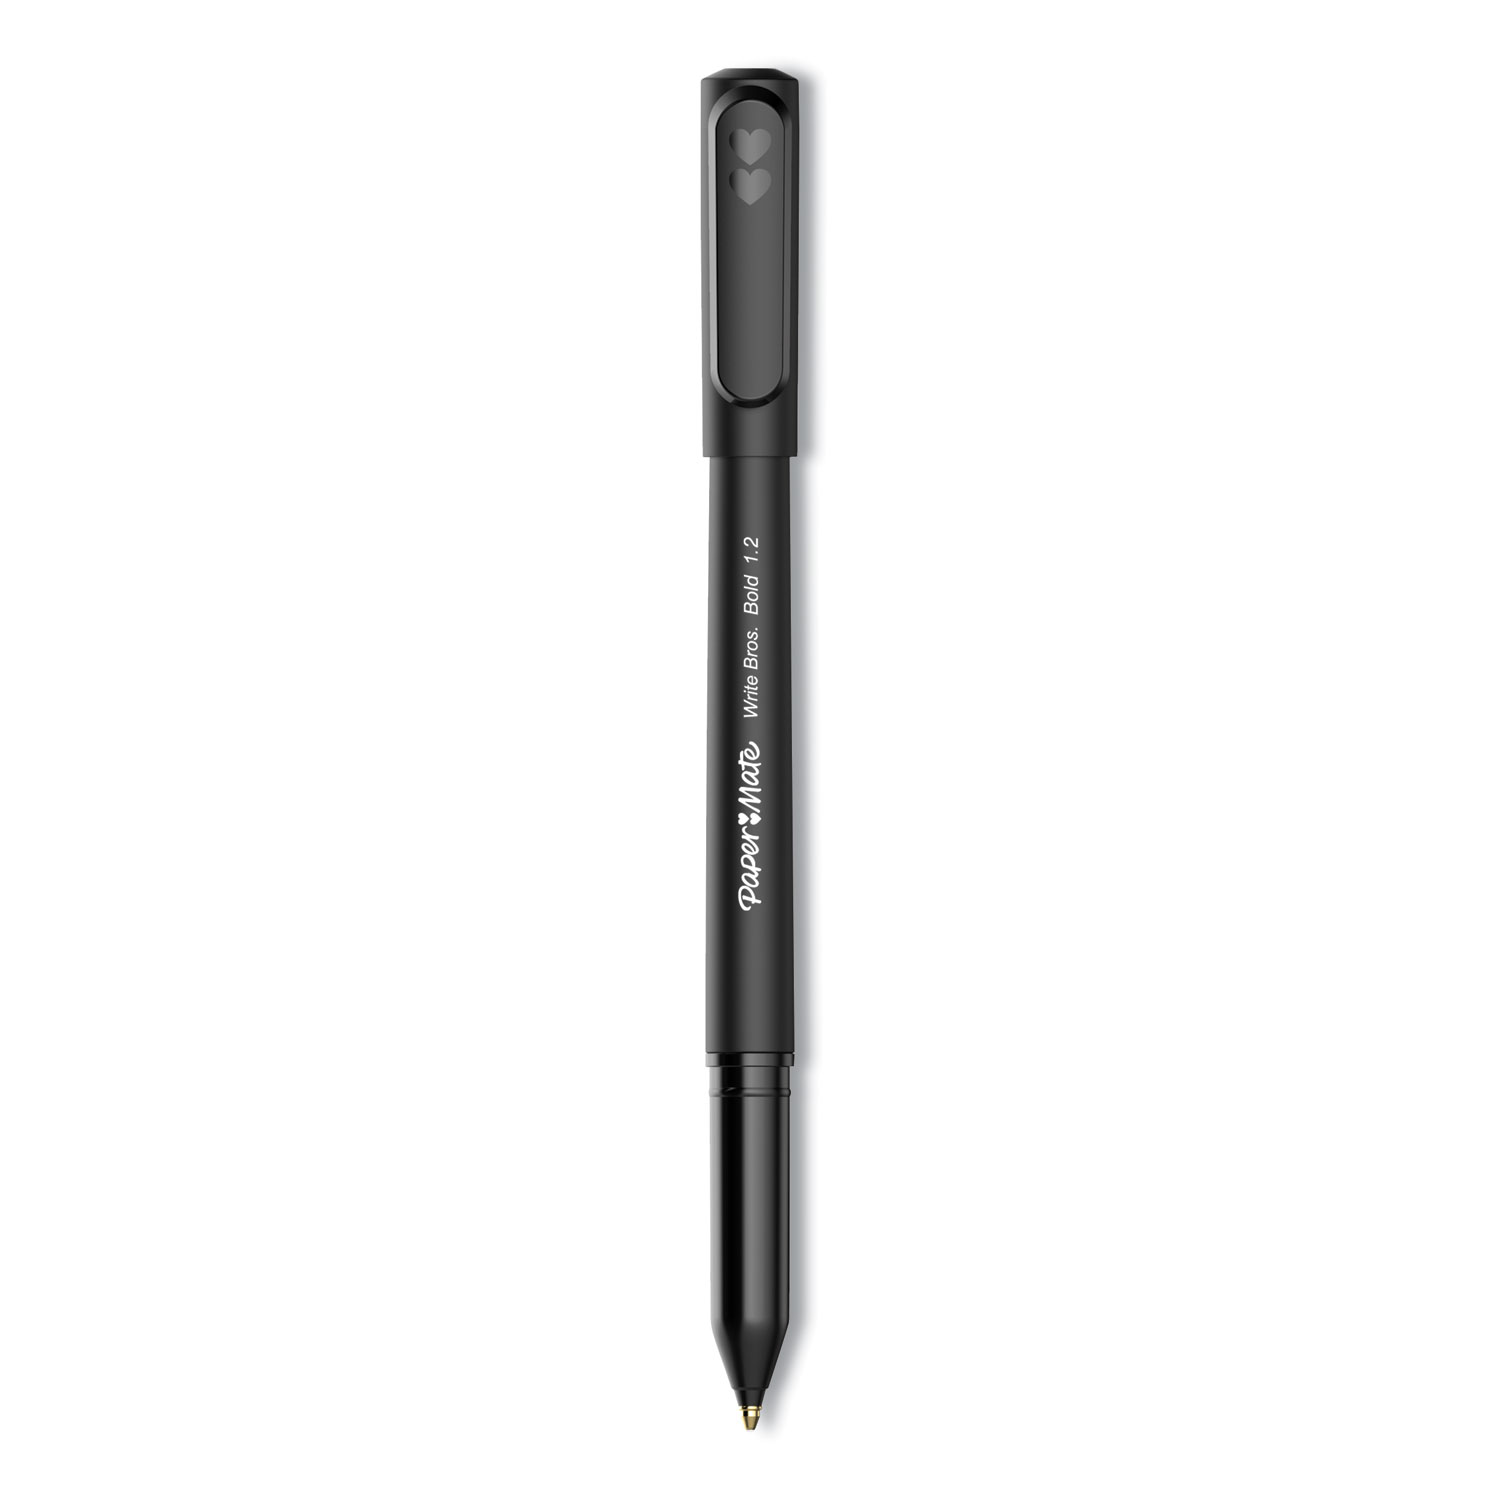 Paper Mate Write Bros. 0.8mm Ballpoint Pen - Fine Pen Point - 0.8